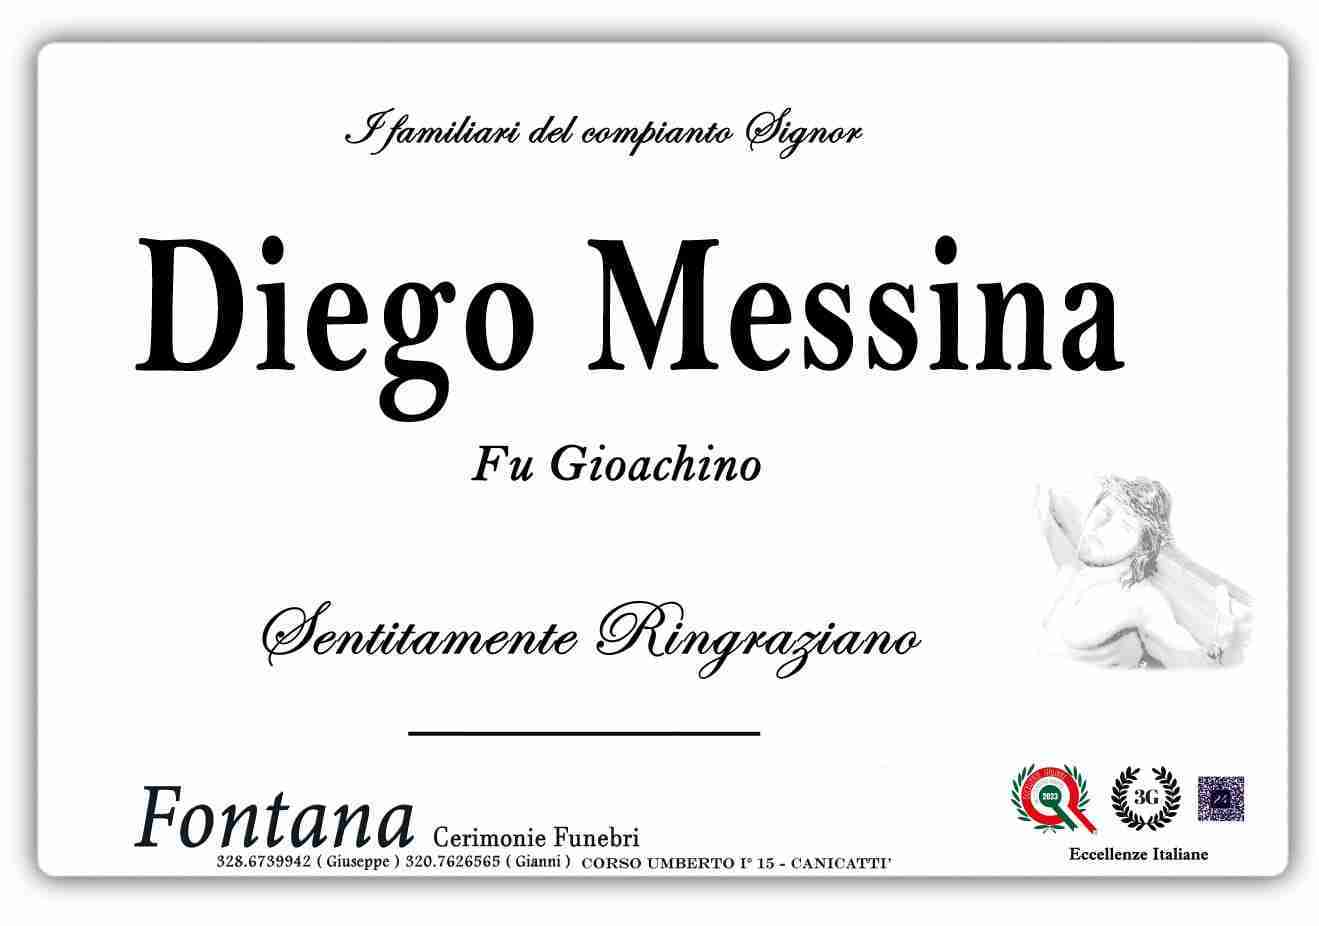 Diego Messina